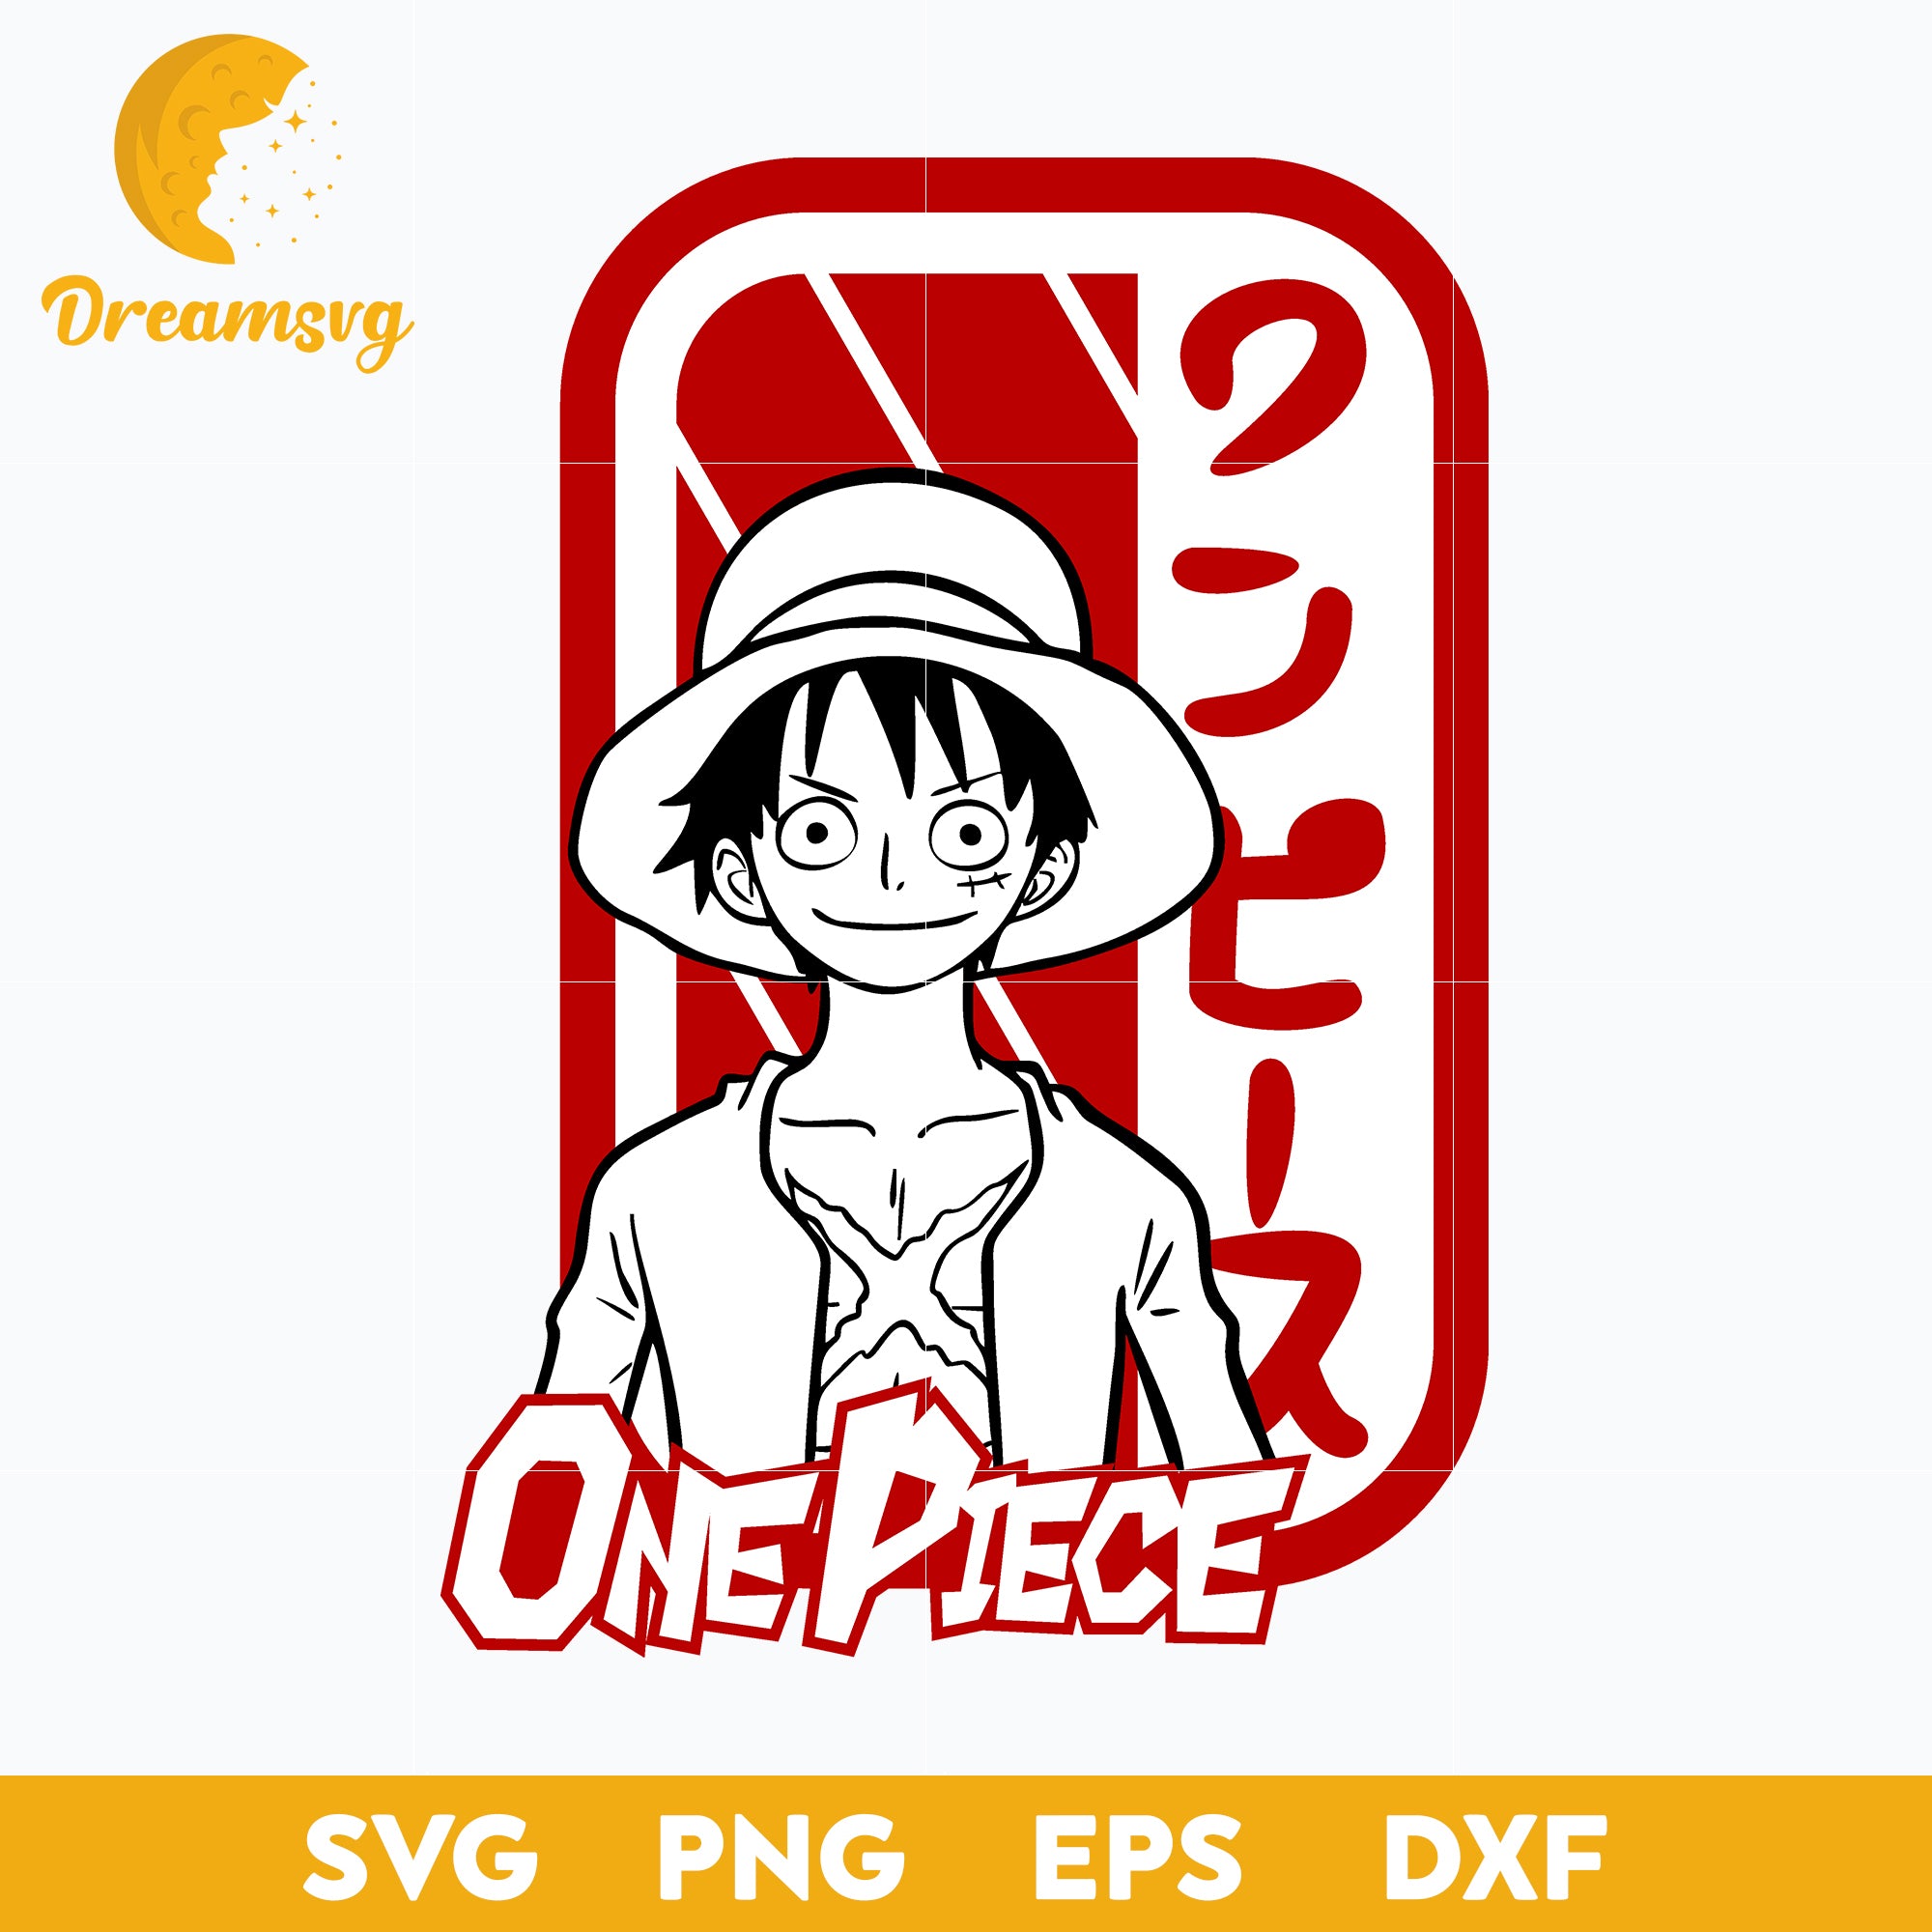 One Piece Svg, One Piece Characters Svg, Luffy Svg, Ace Svg, Sabo Svg,  Anime Svg, Svg, Png, Dxf, Eps - Download